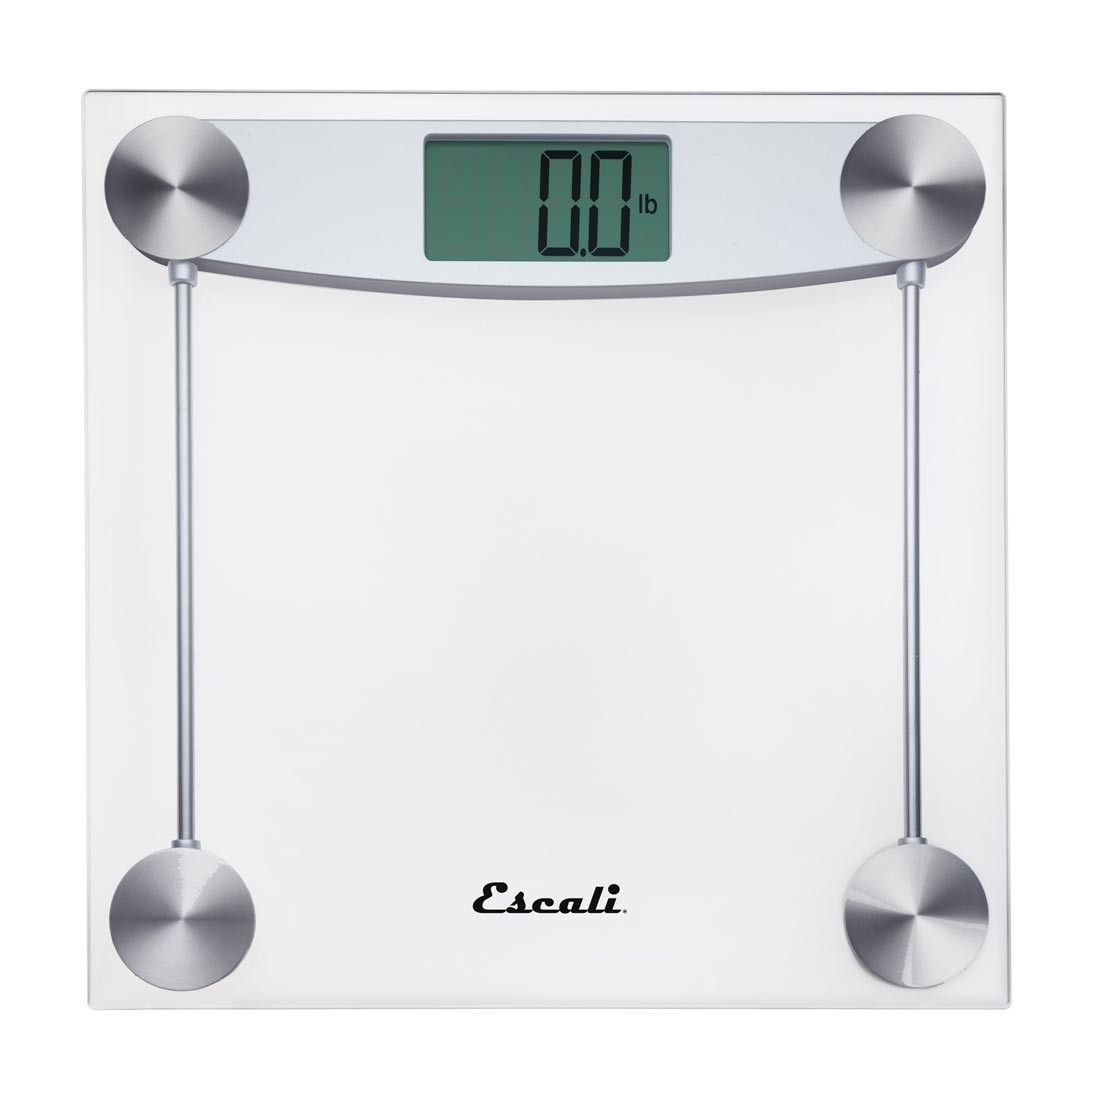 E184 Glass Bathroom Scale- Chorme - 400 Lbs Capacity